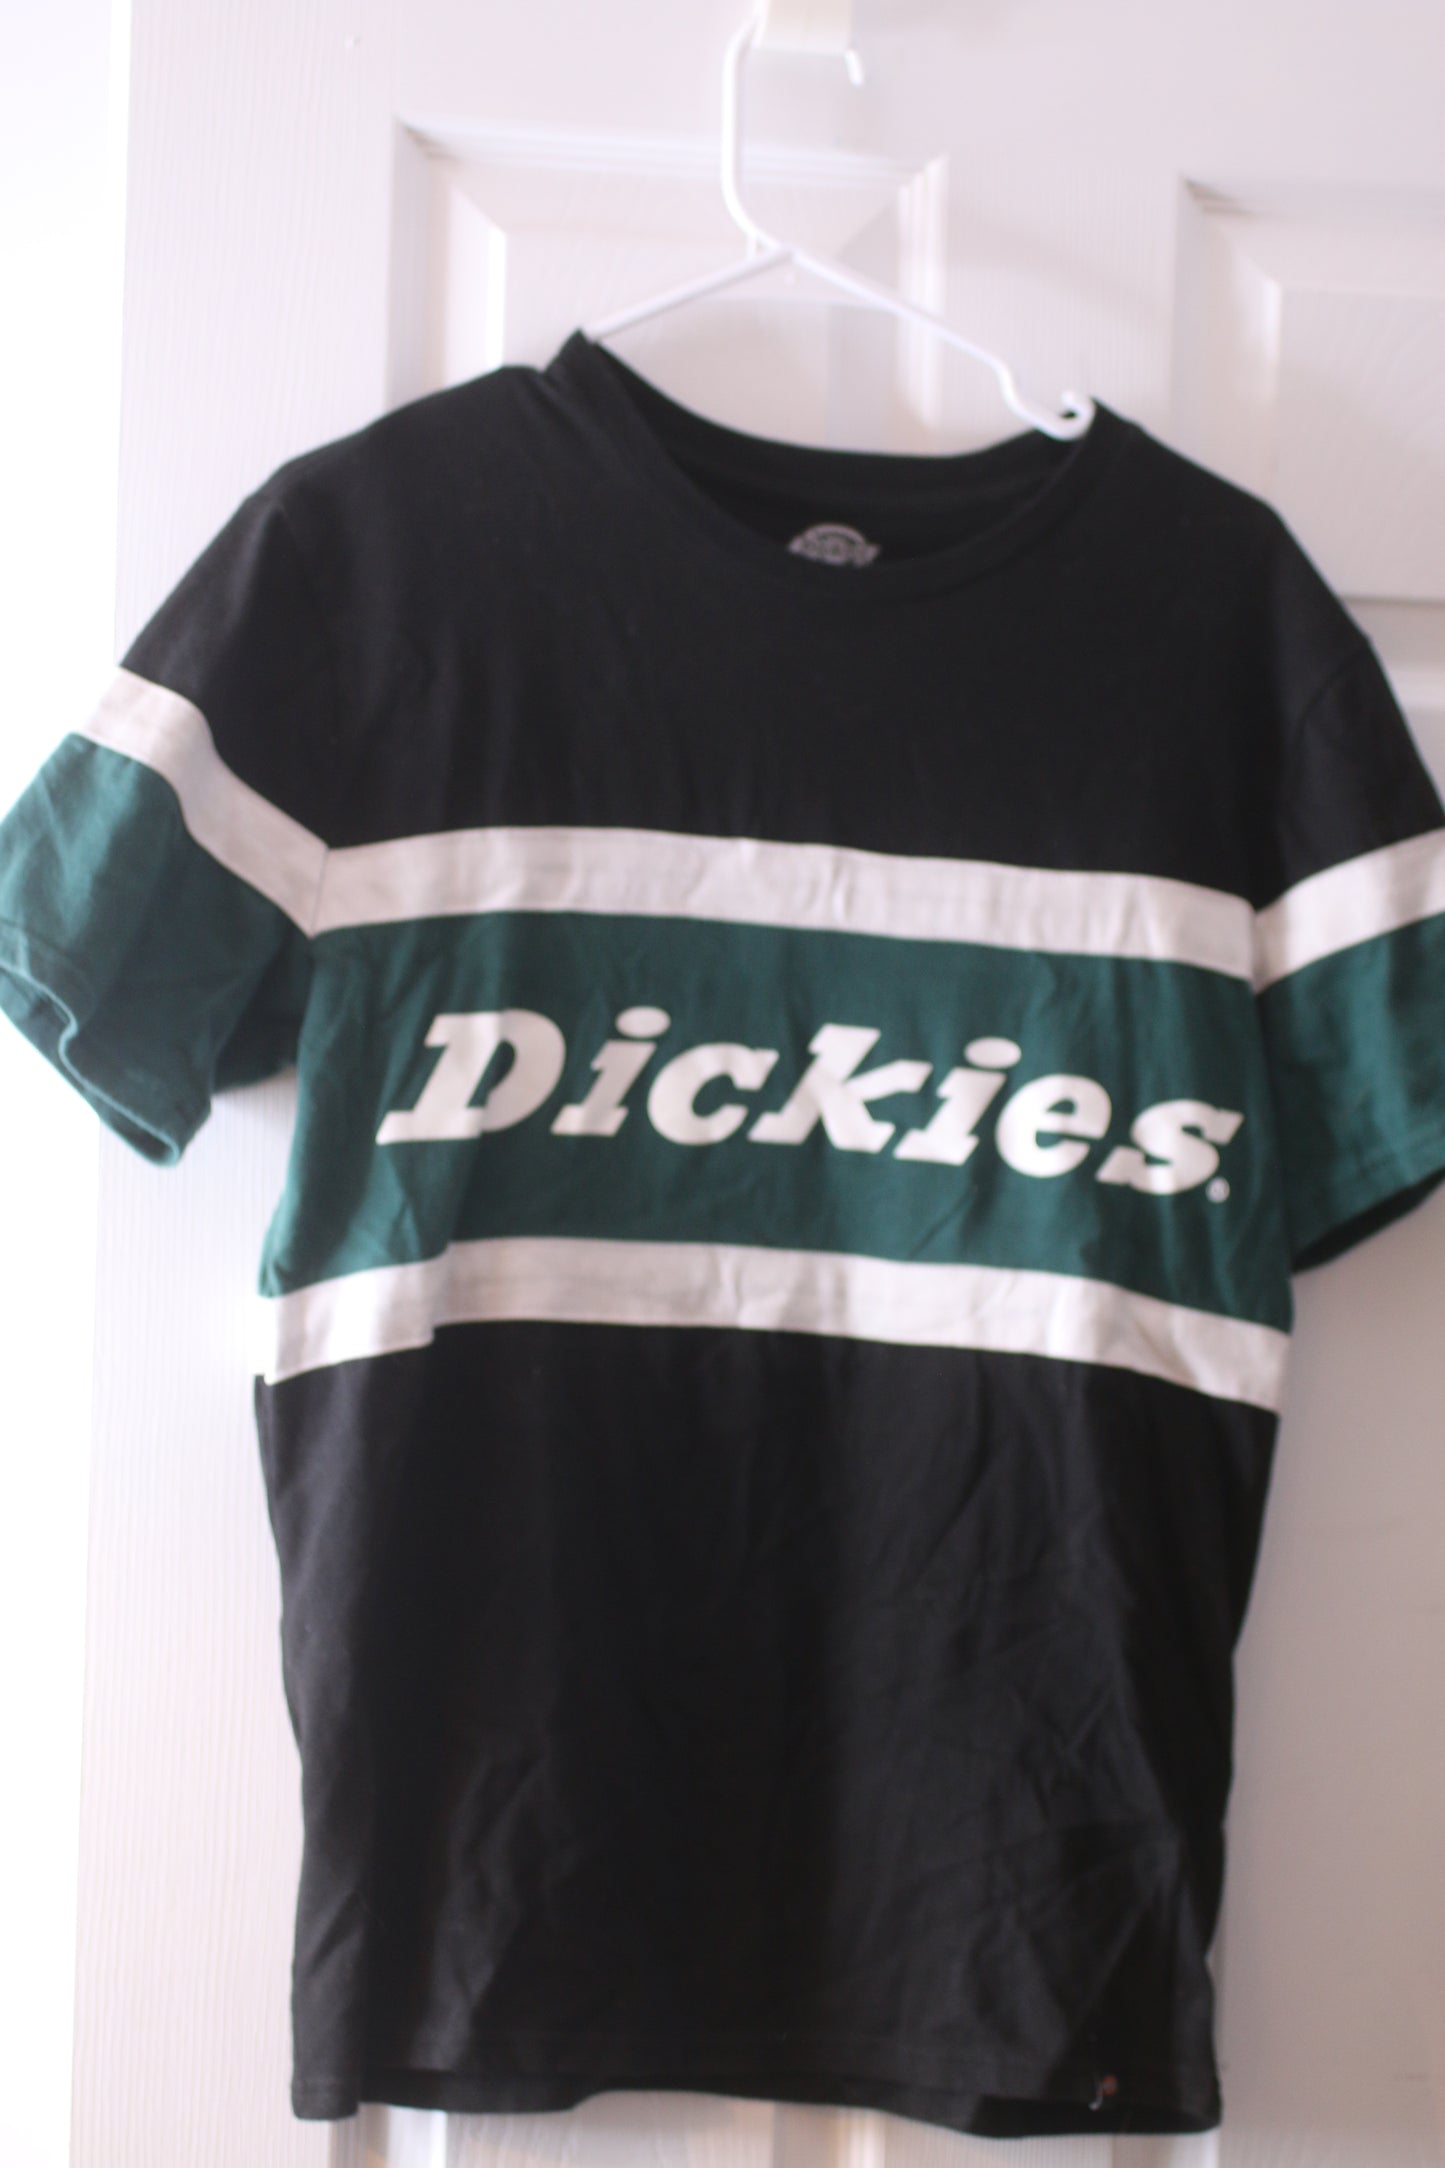 Dickies t-shirt, Size medium , Black & Green with classic logo